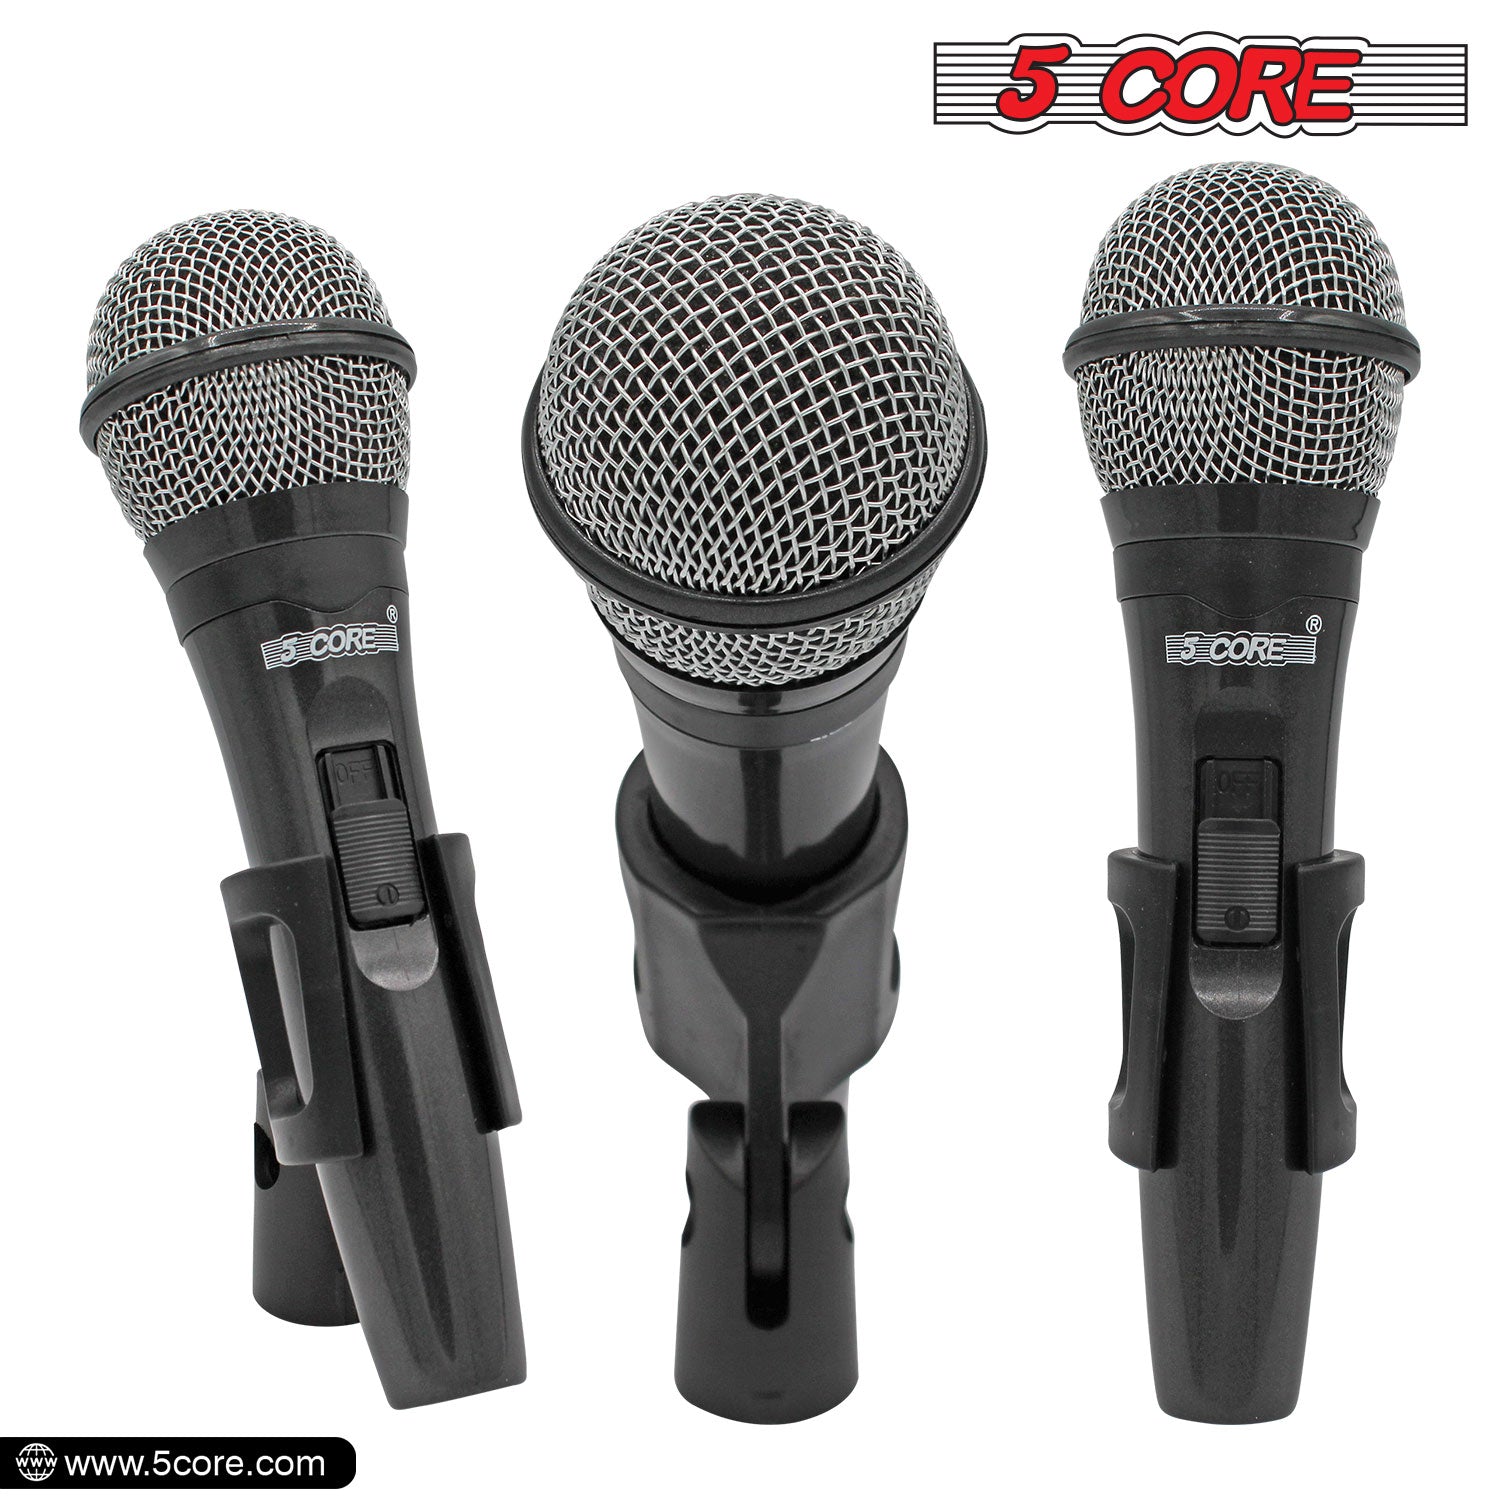 Premium Sound Quality: 5 Core PM 600 Karaoke Mic for Singing